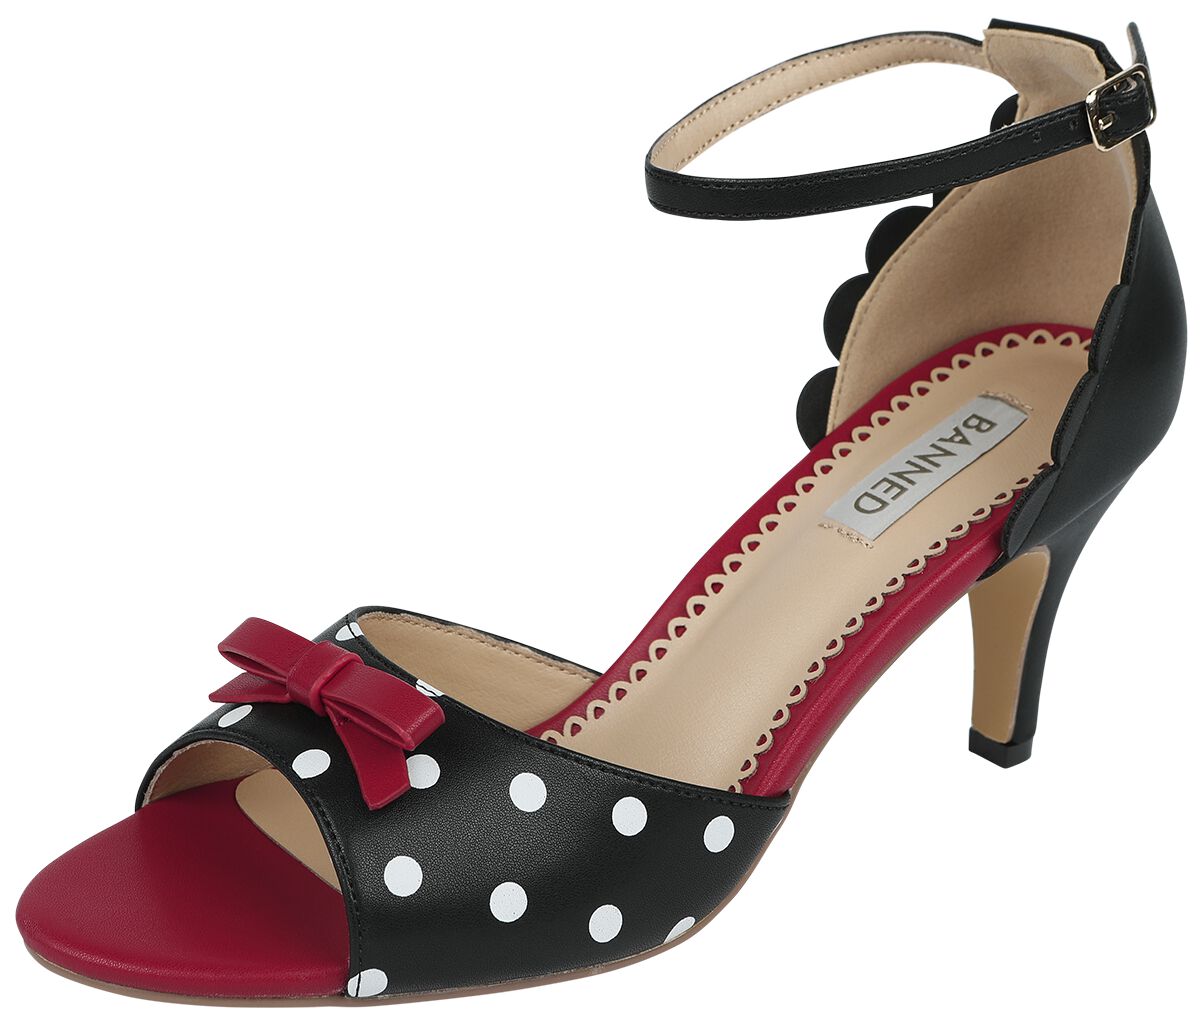 Banned Retro Poppy Polka Open Toe Sandals High Heel schwarz rot in EU36